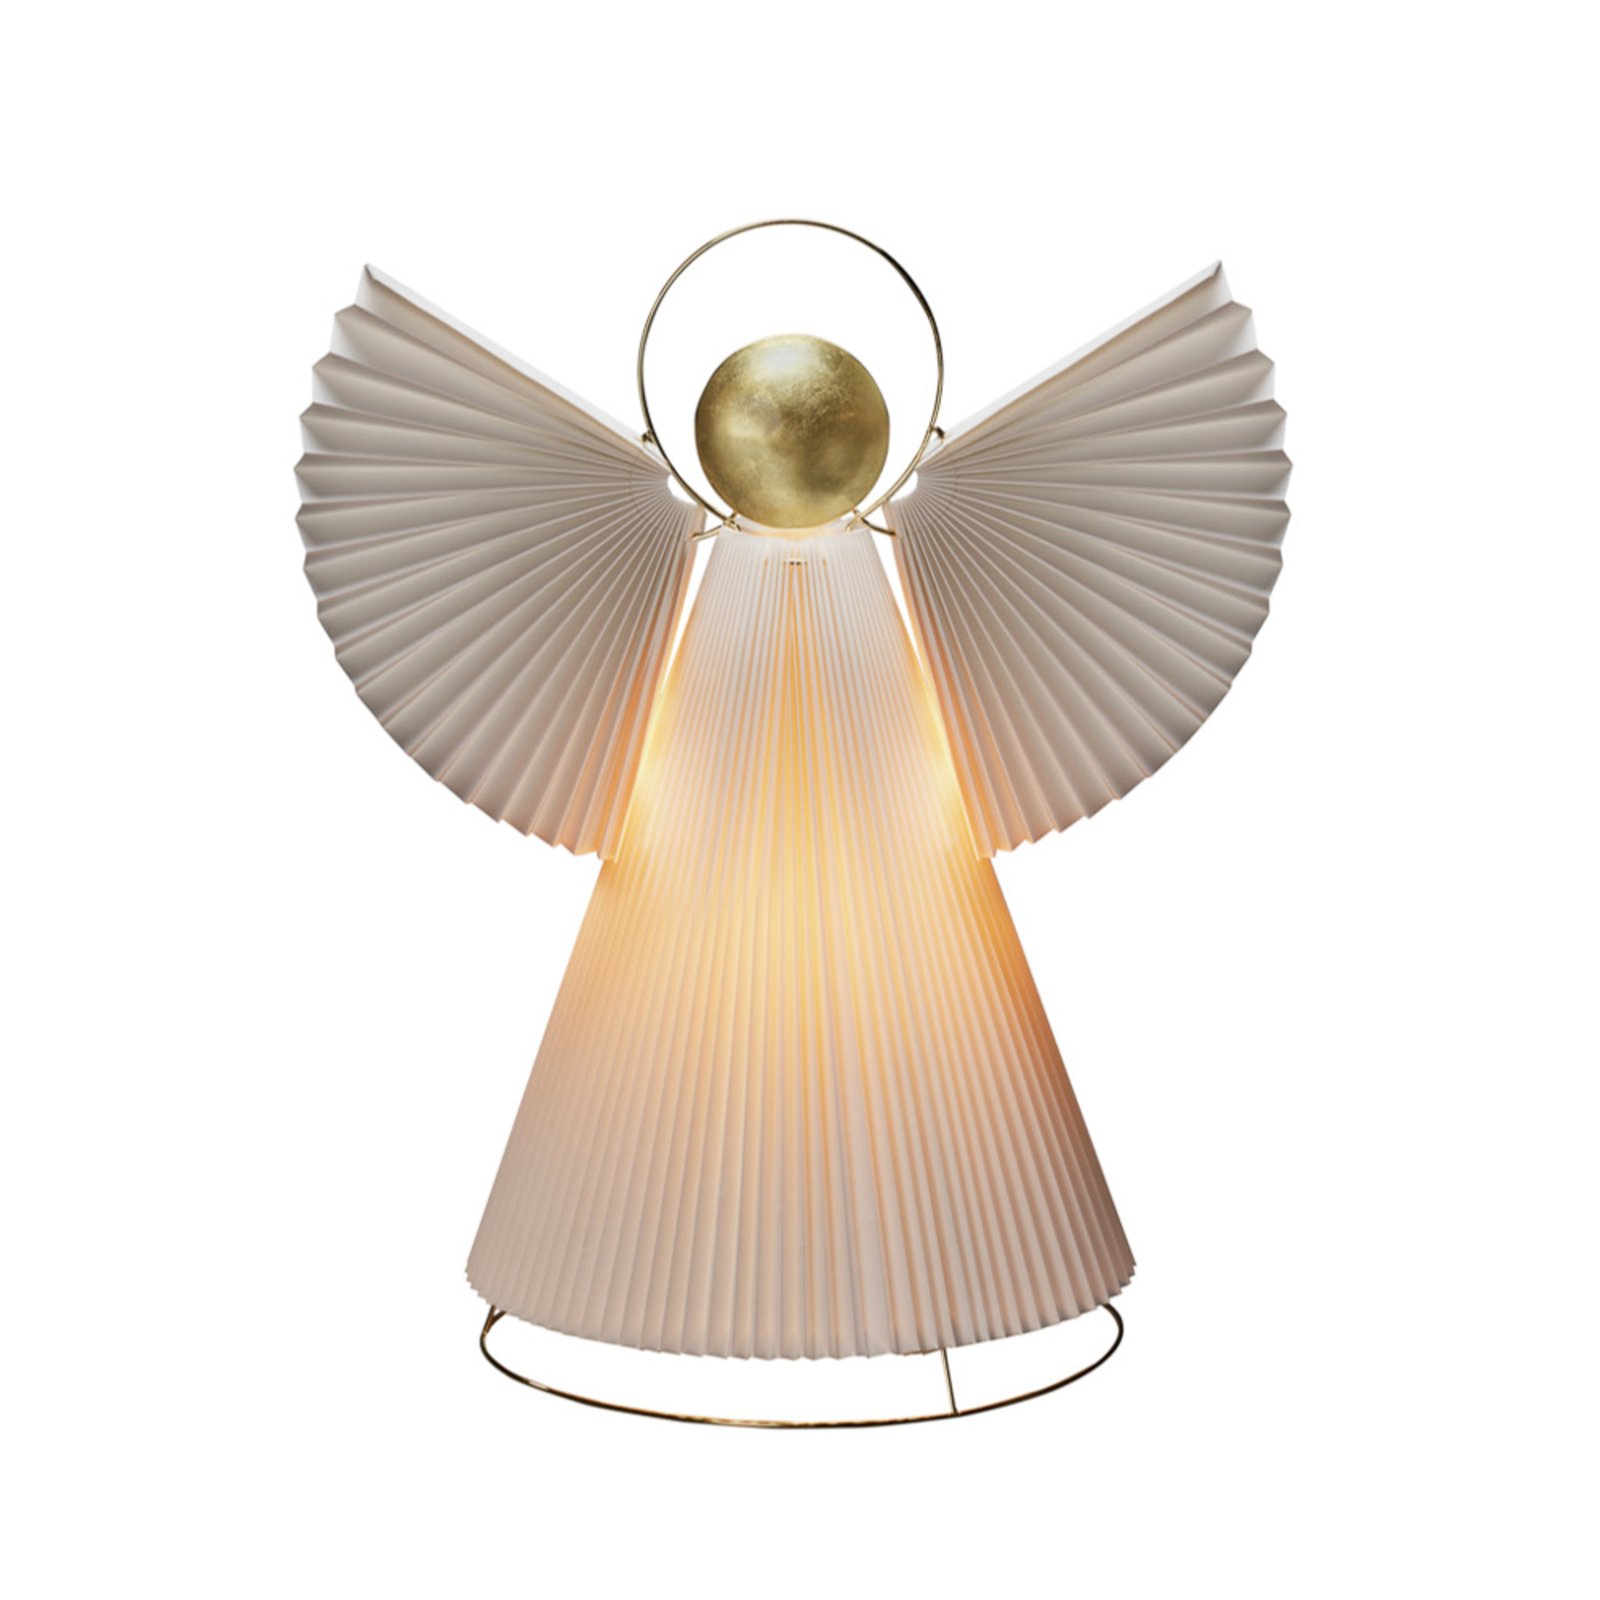 Dekoratívny svetelný anjel z papiera E14 biely/mosadz 54cm